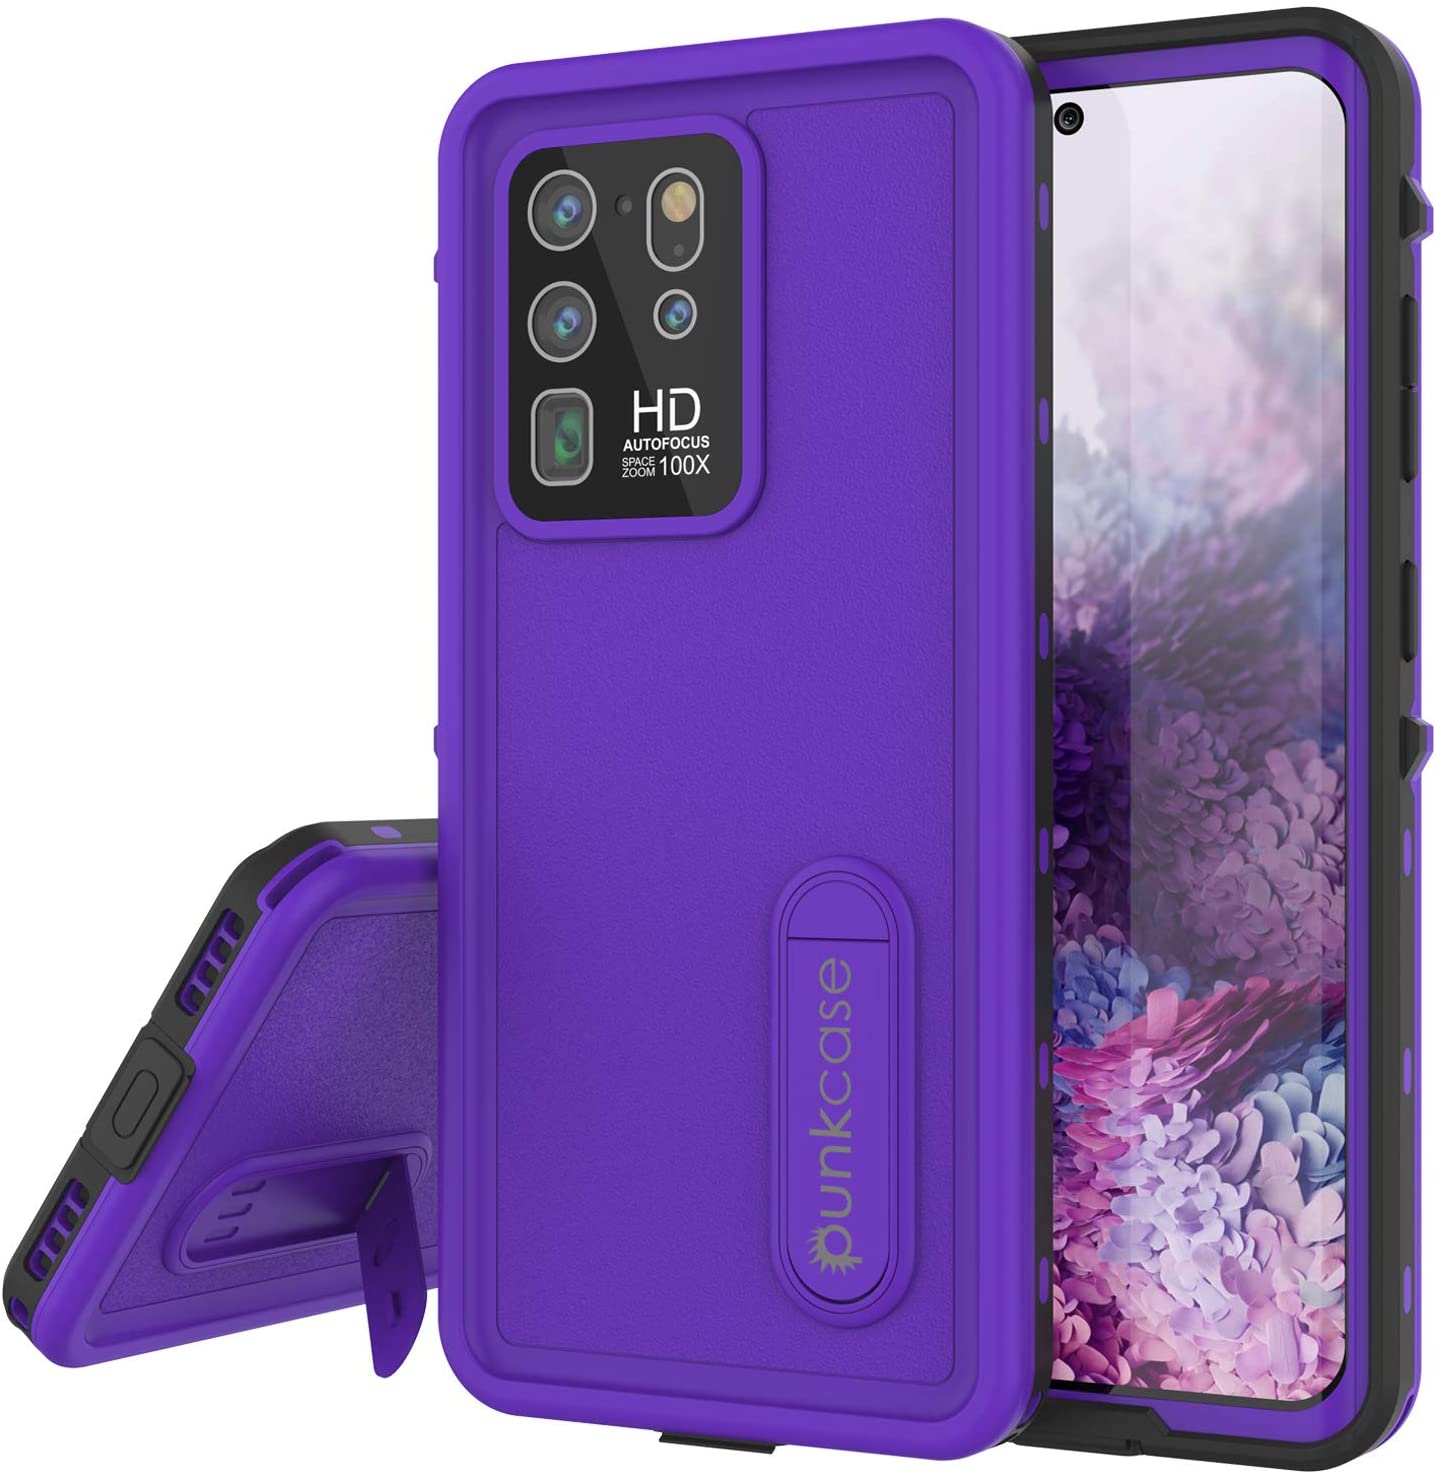 Galaxy S20 Ultra Waterproof Case, Punkcase [KickStud Series] Armor Cover [Purple]